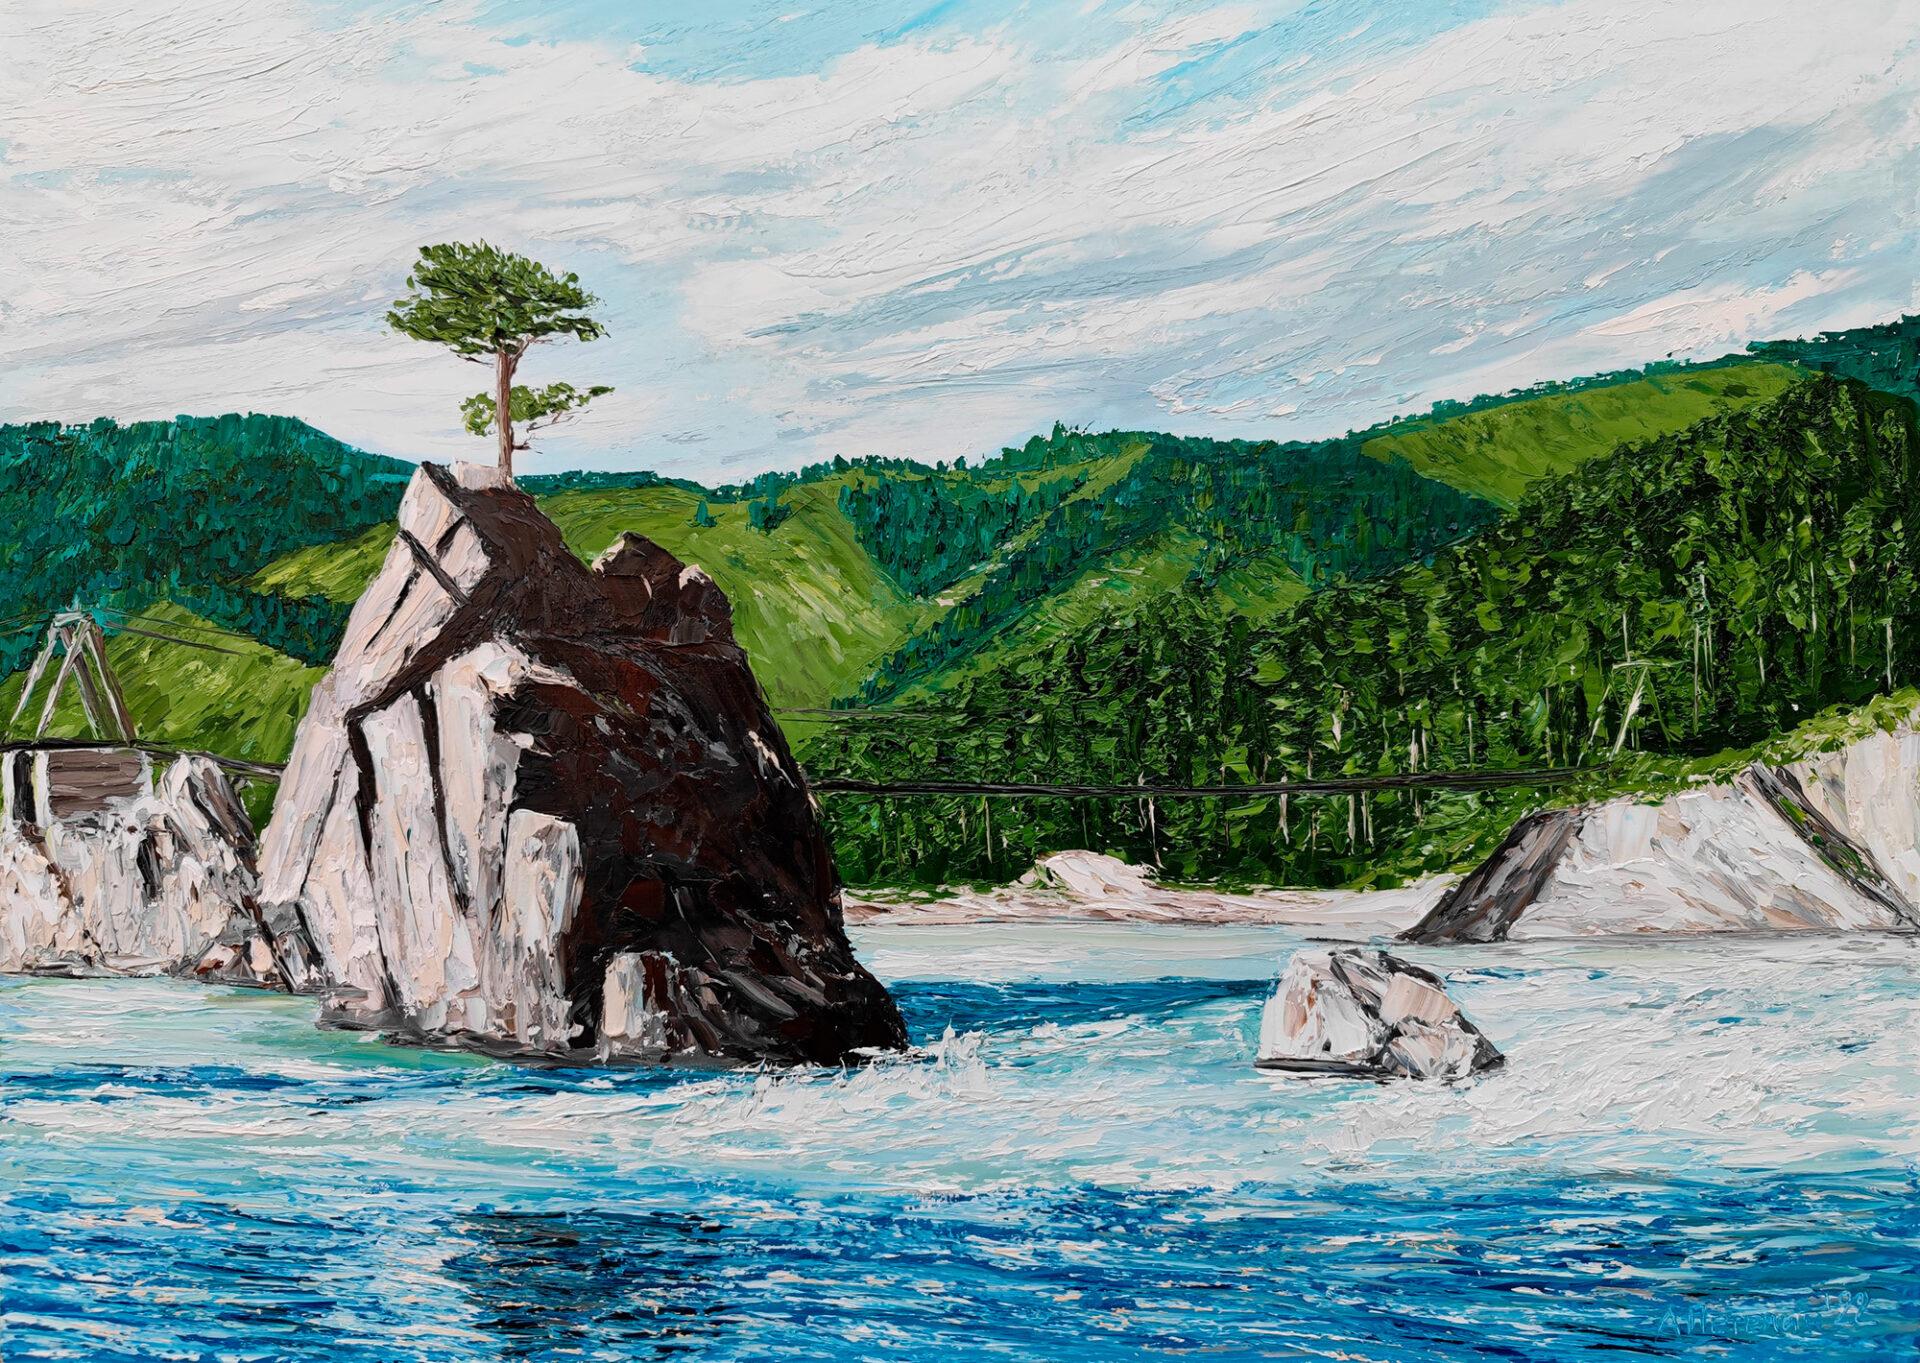 Aleksandr Petelin Landscape Painting - Katun river. “Dragon teeth” rocks